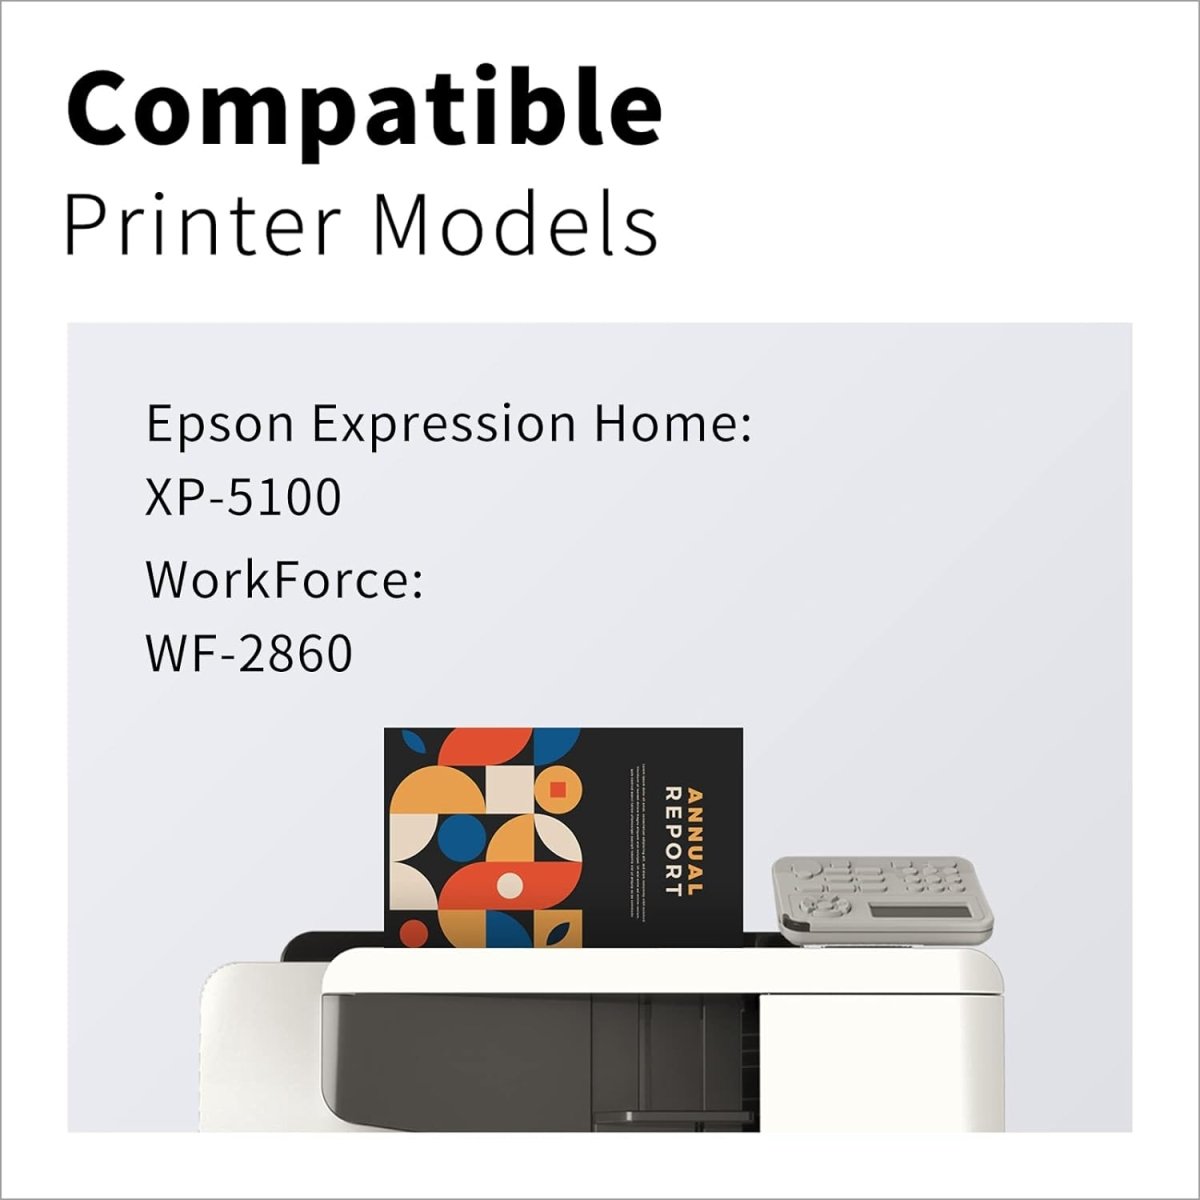 Remanufactured Epson 202XL Ink Cartridge (Black Cyan Magenta Yellow, 5-Pack) - Linford Office:Printer Ink & Toner Cartridge